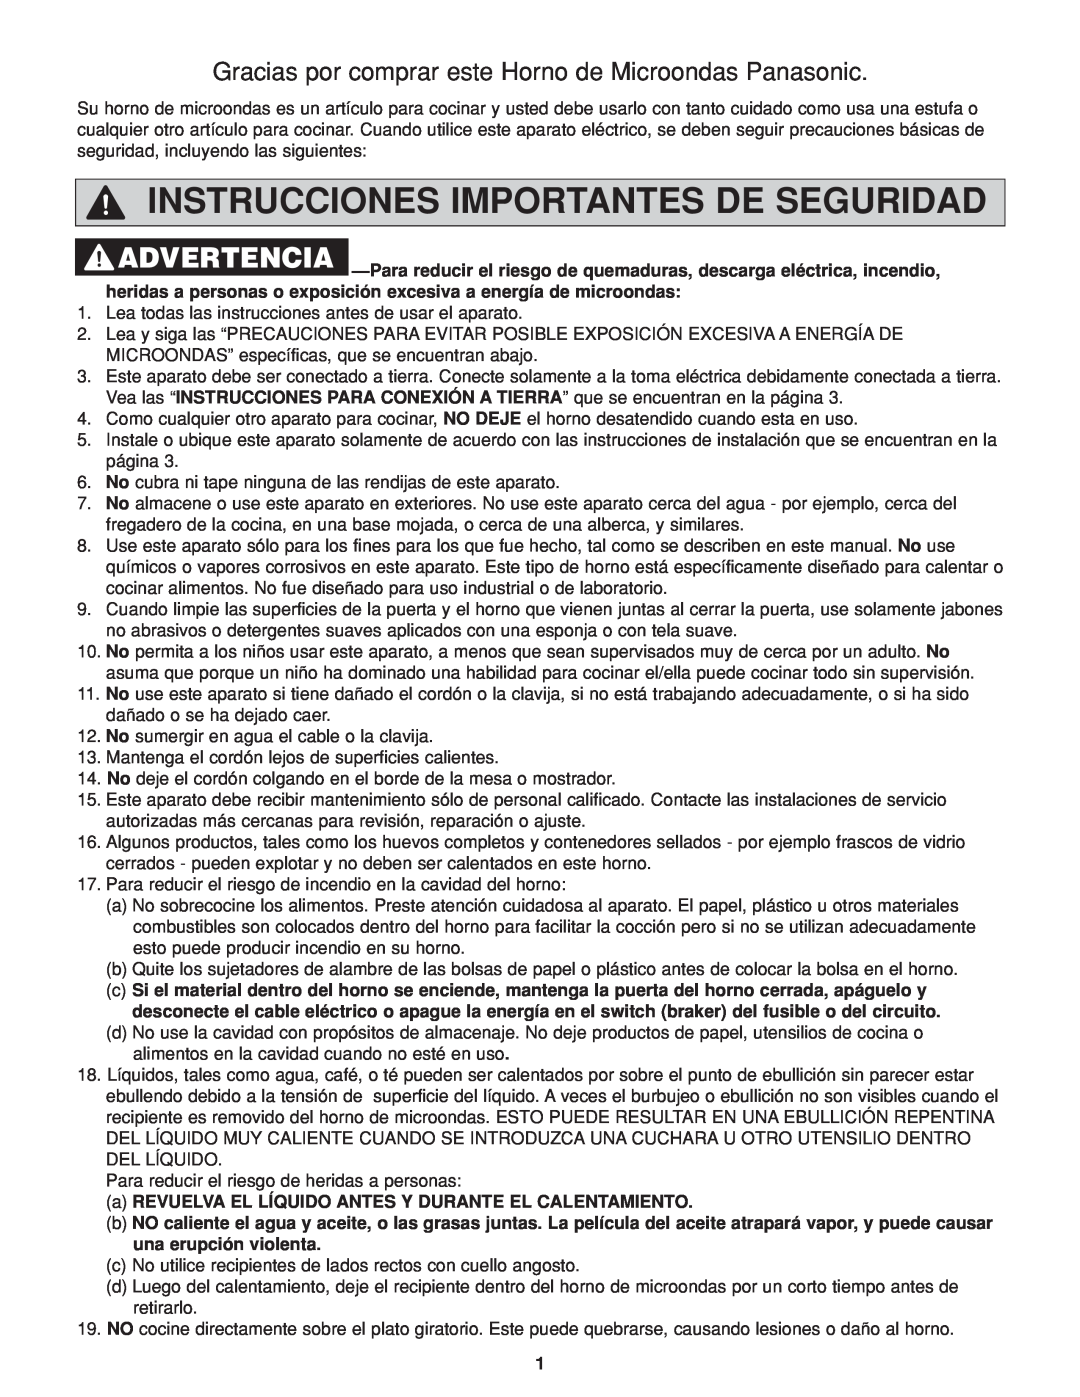 Panasonic NN-H264 important safety instructions Instrucciones Importantes De Seguridad 